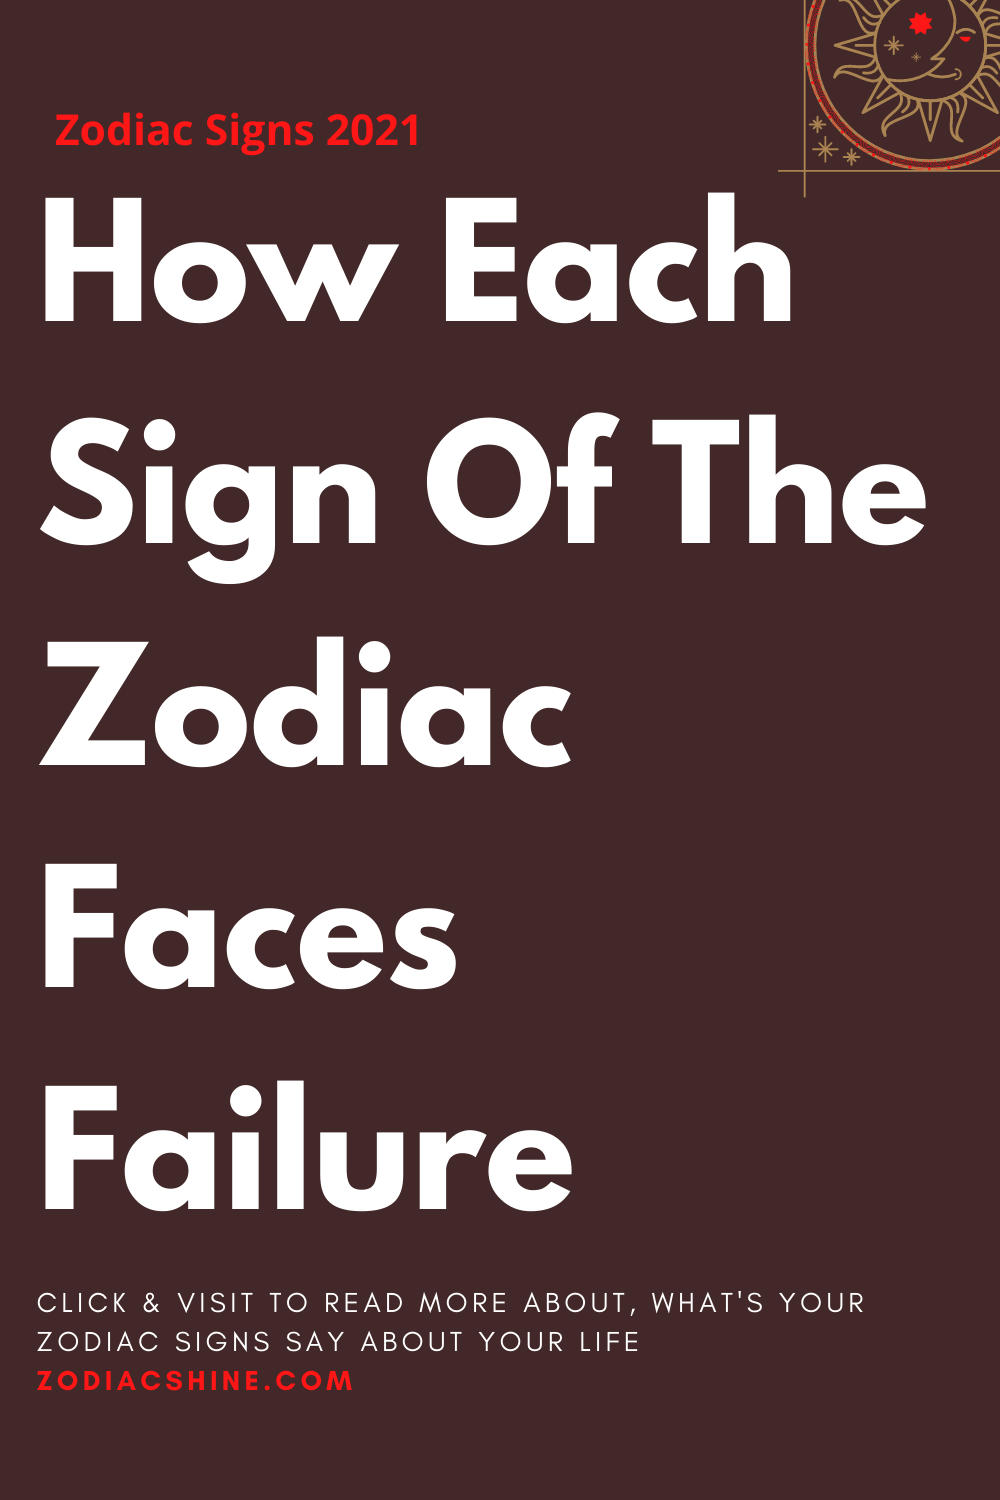 How Each Sign Of The Zodiac Faces Failure